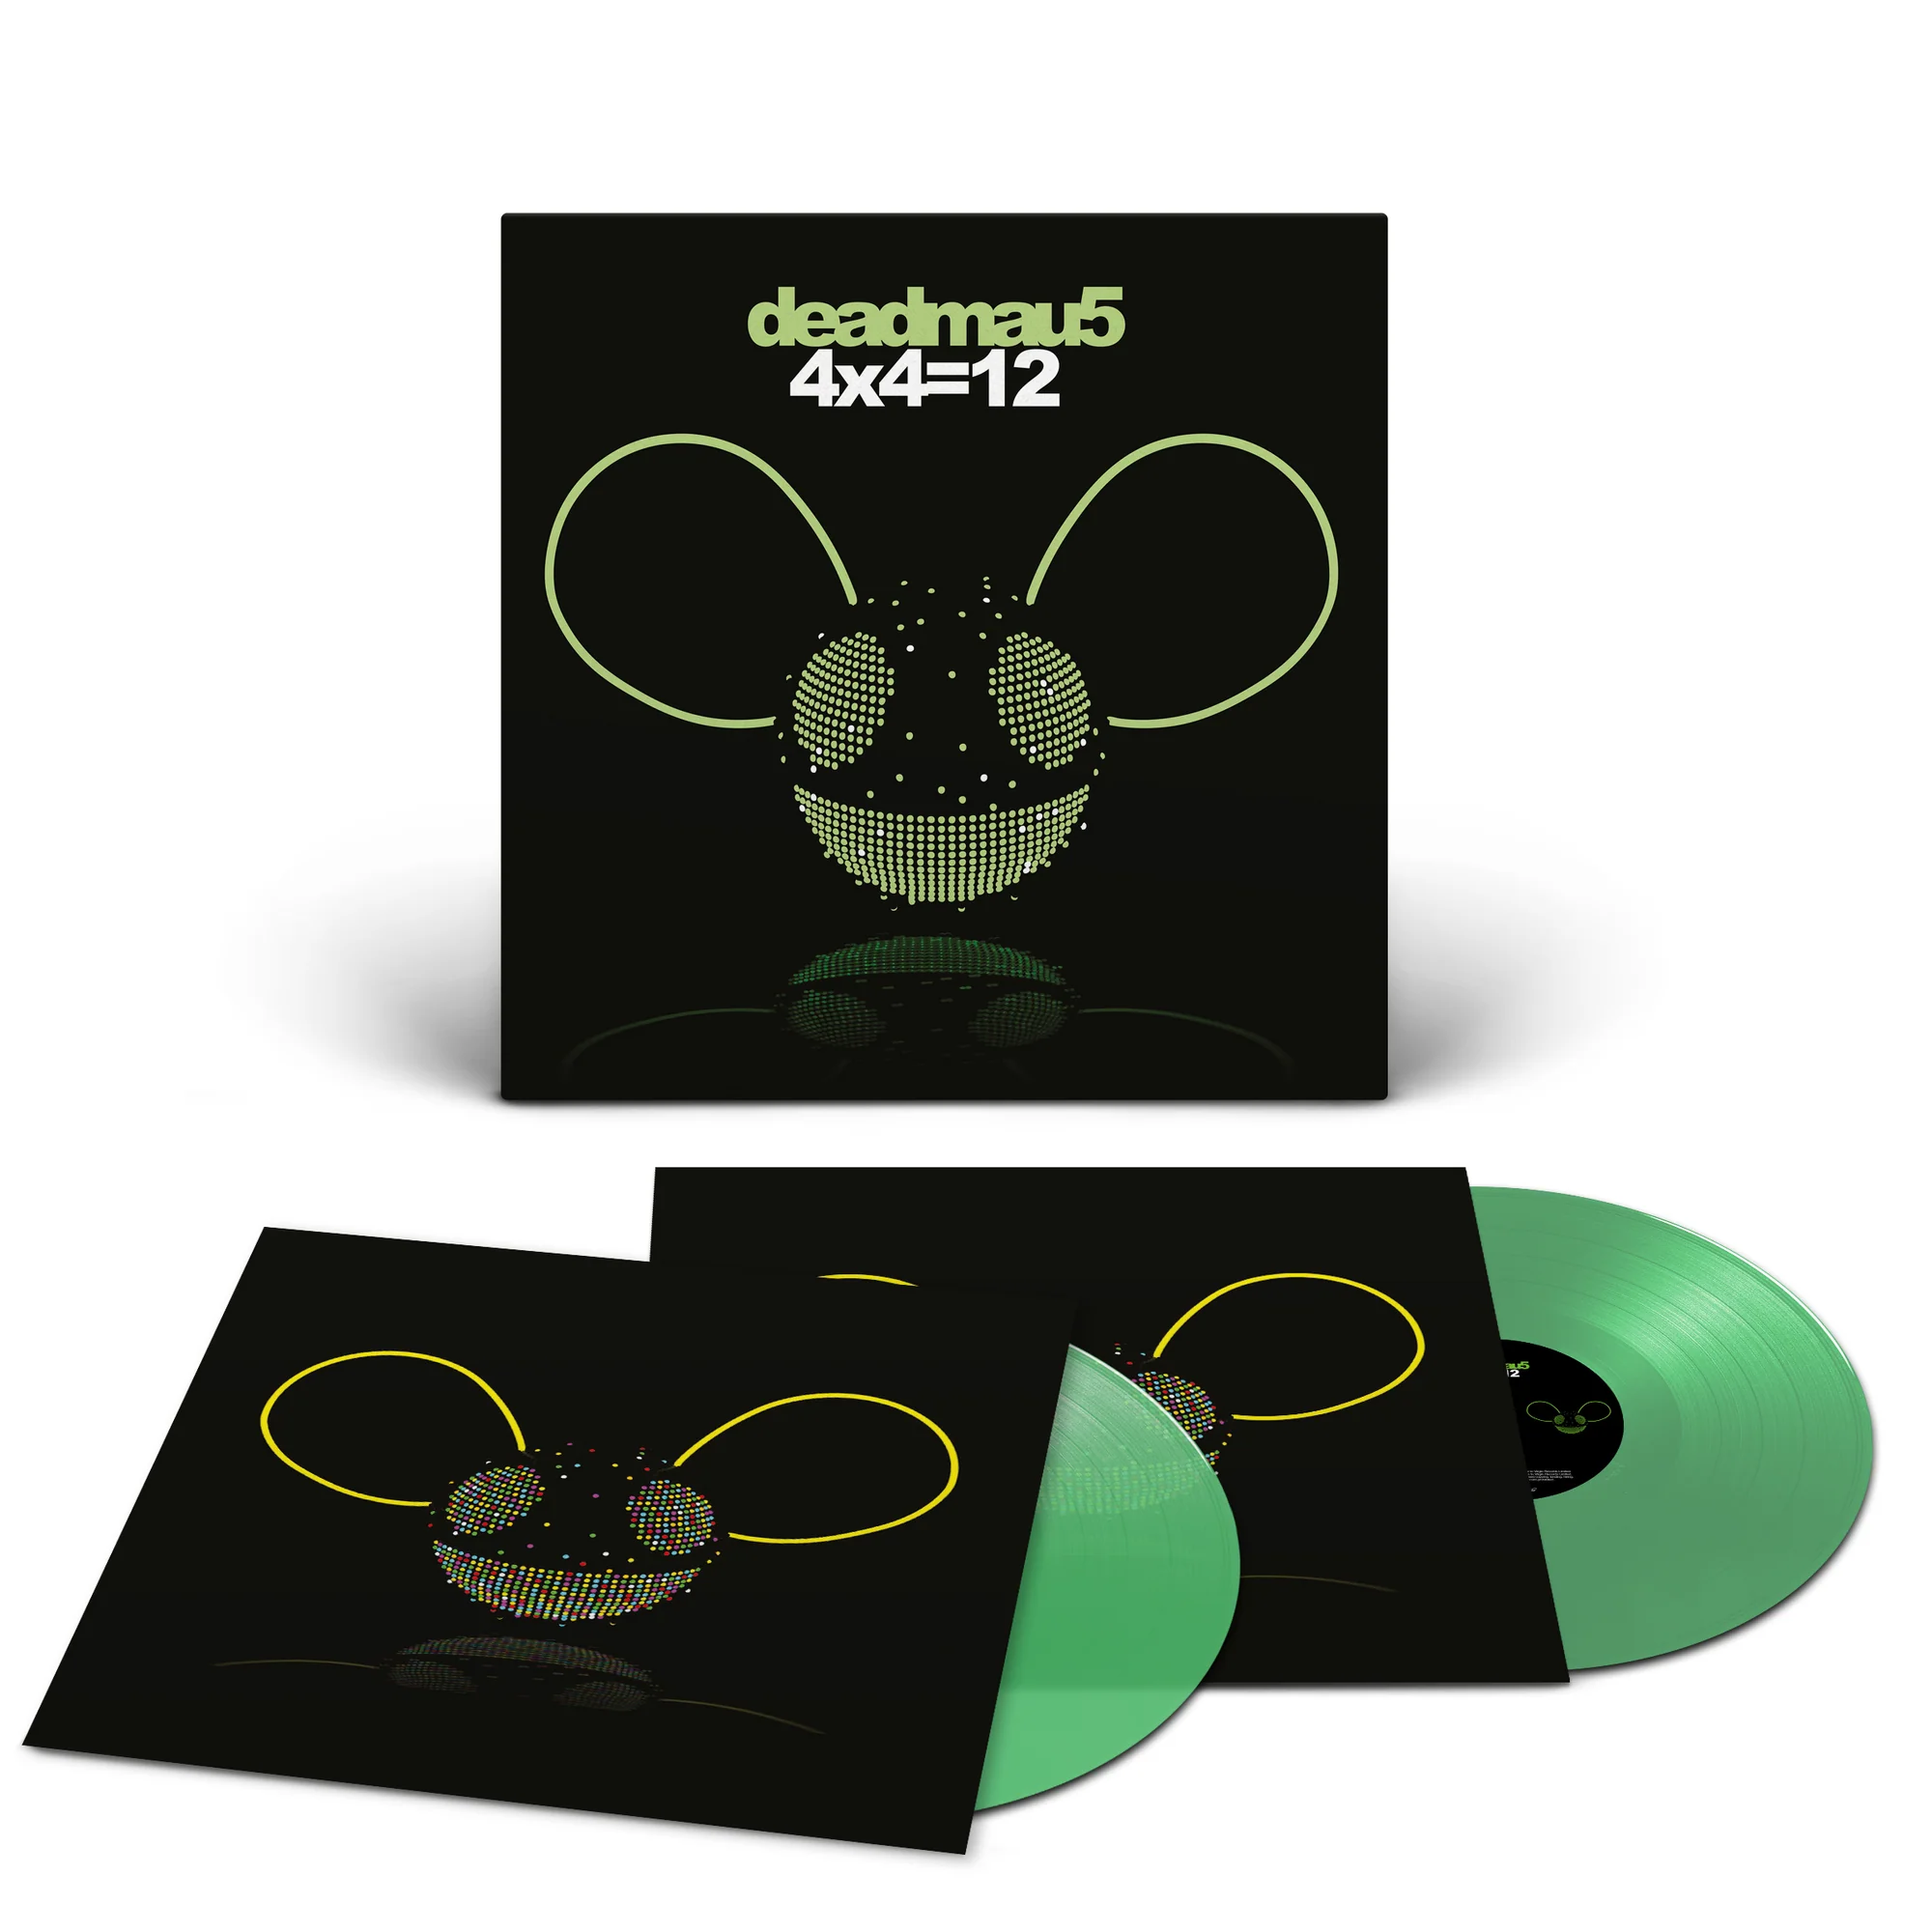 deadmau5 - 4x4=12 (Translucent Green Vinyl)